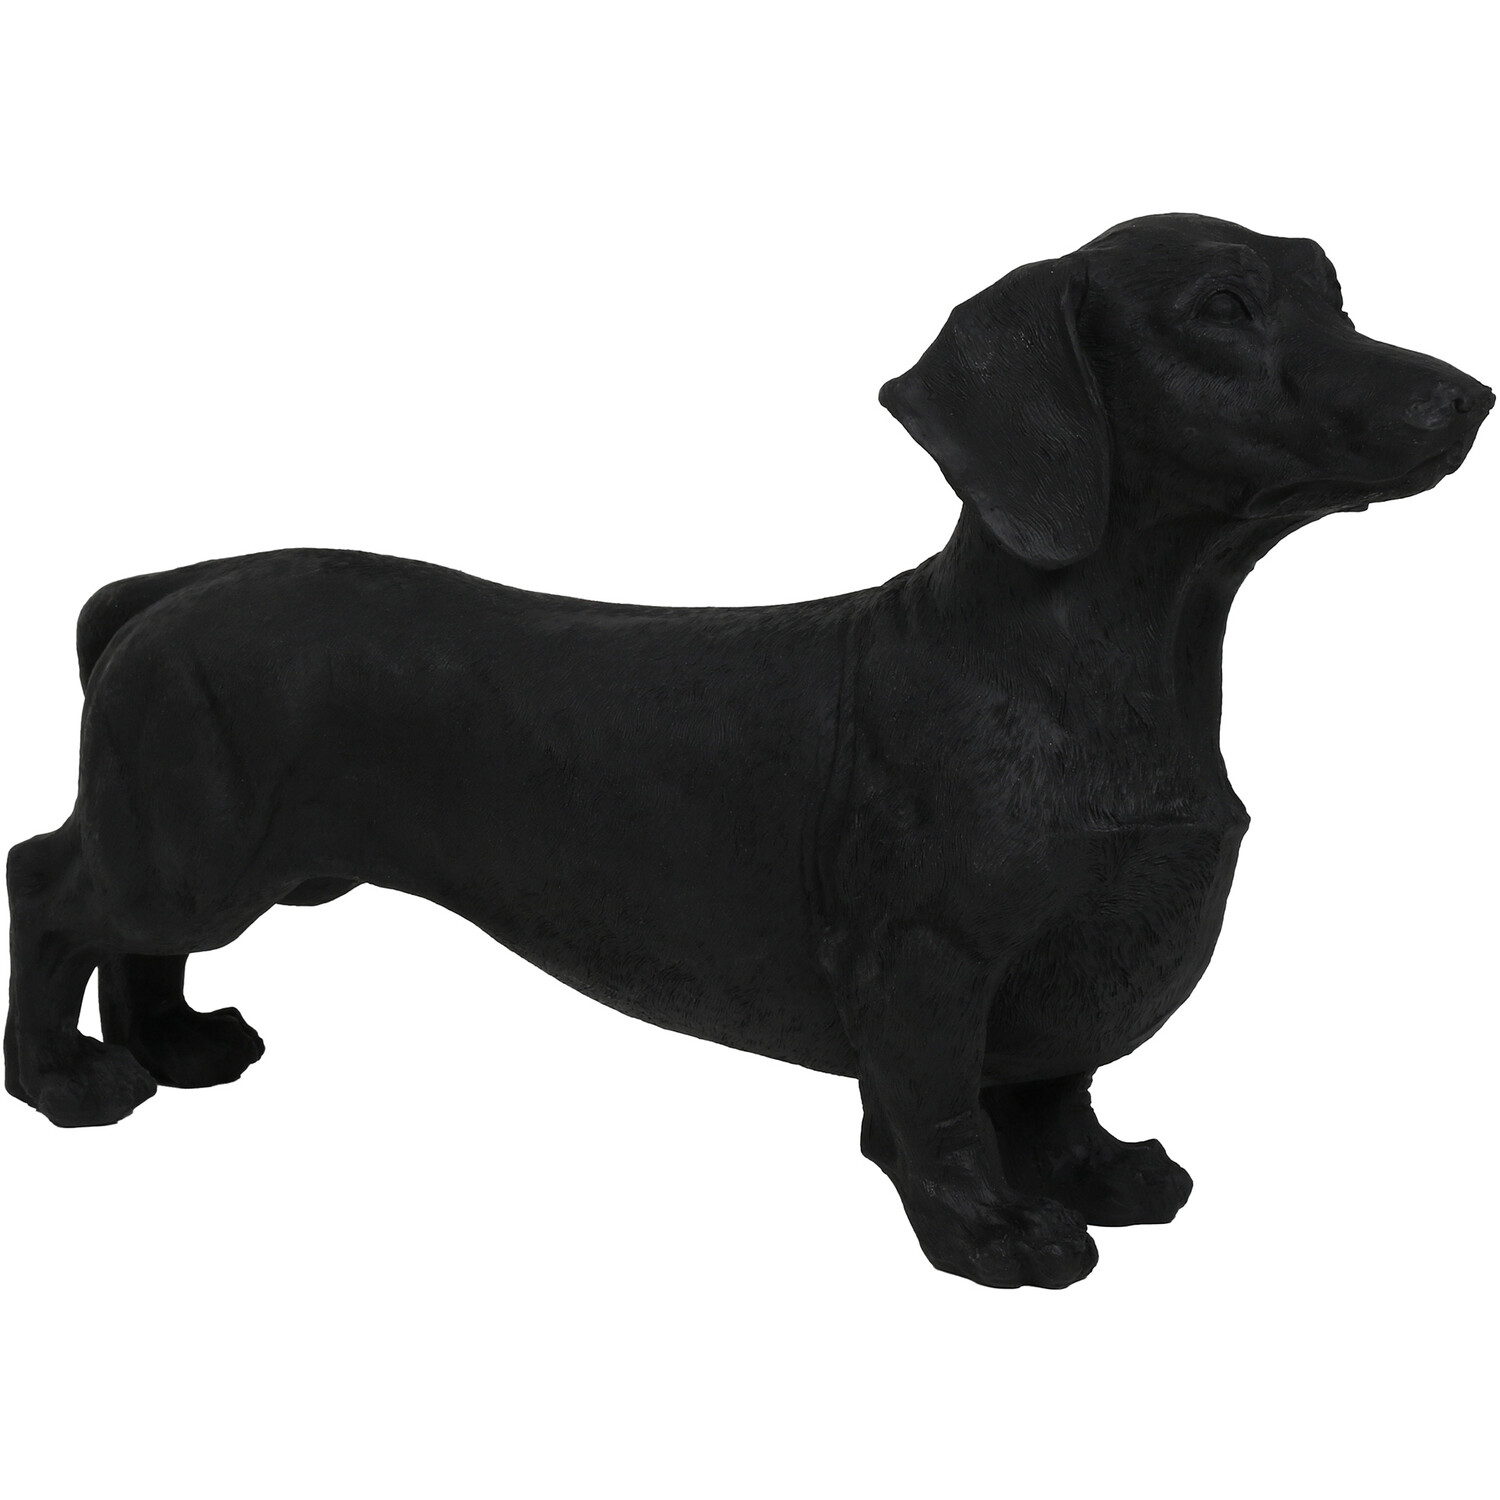 Black Sausage Dog Ornament Image 1